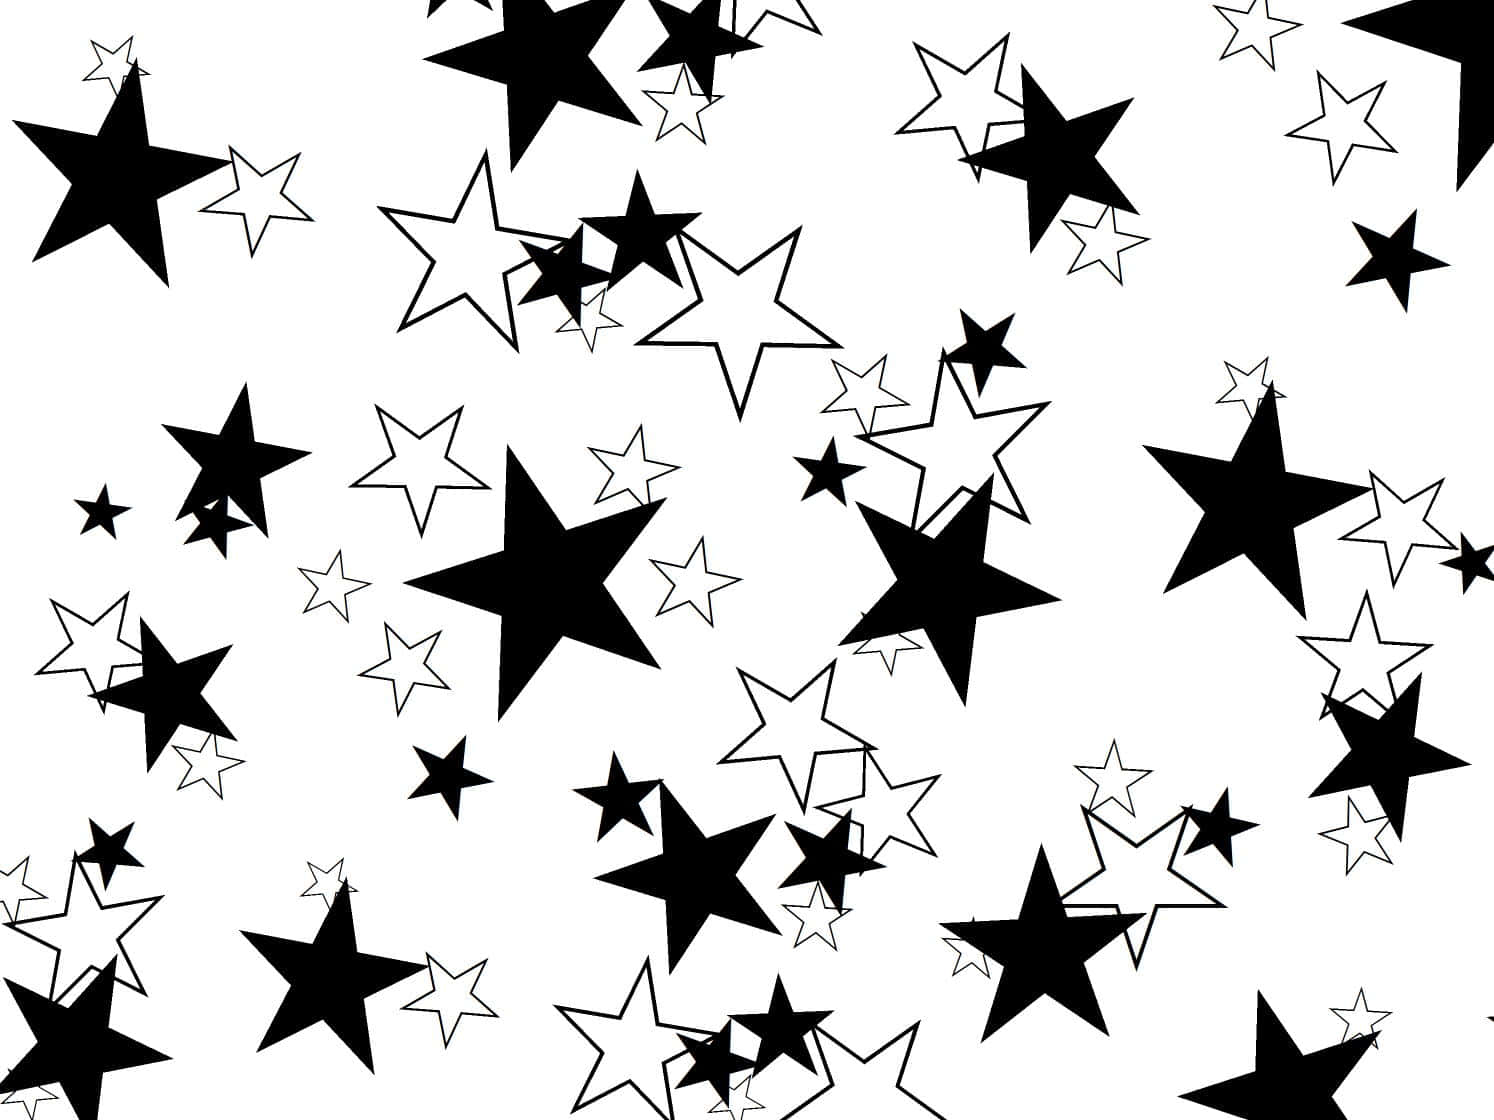 Illuminating Black and White Star Wallpaper